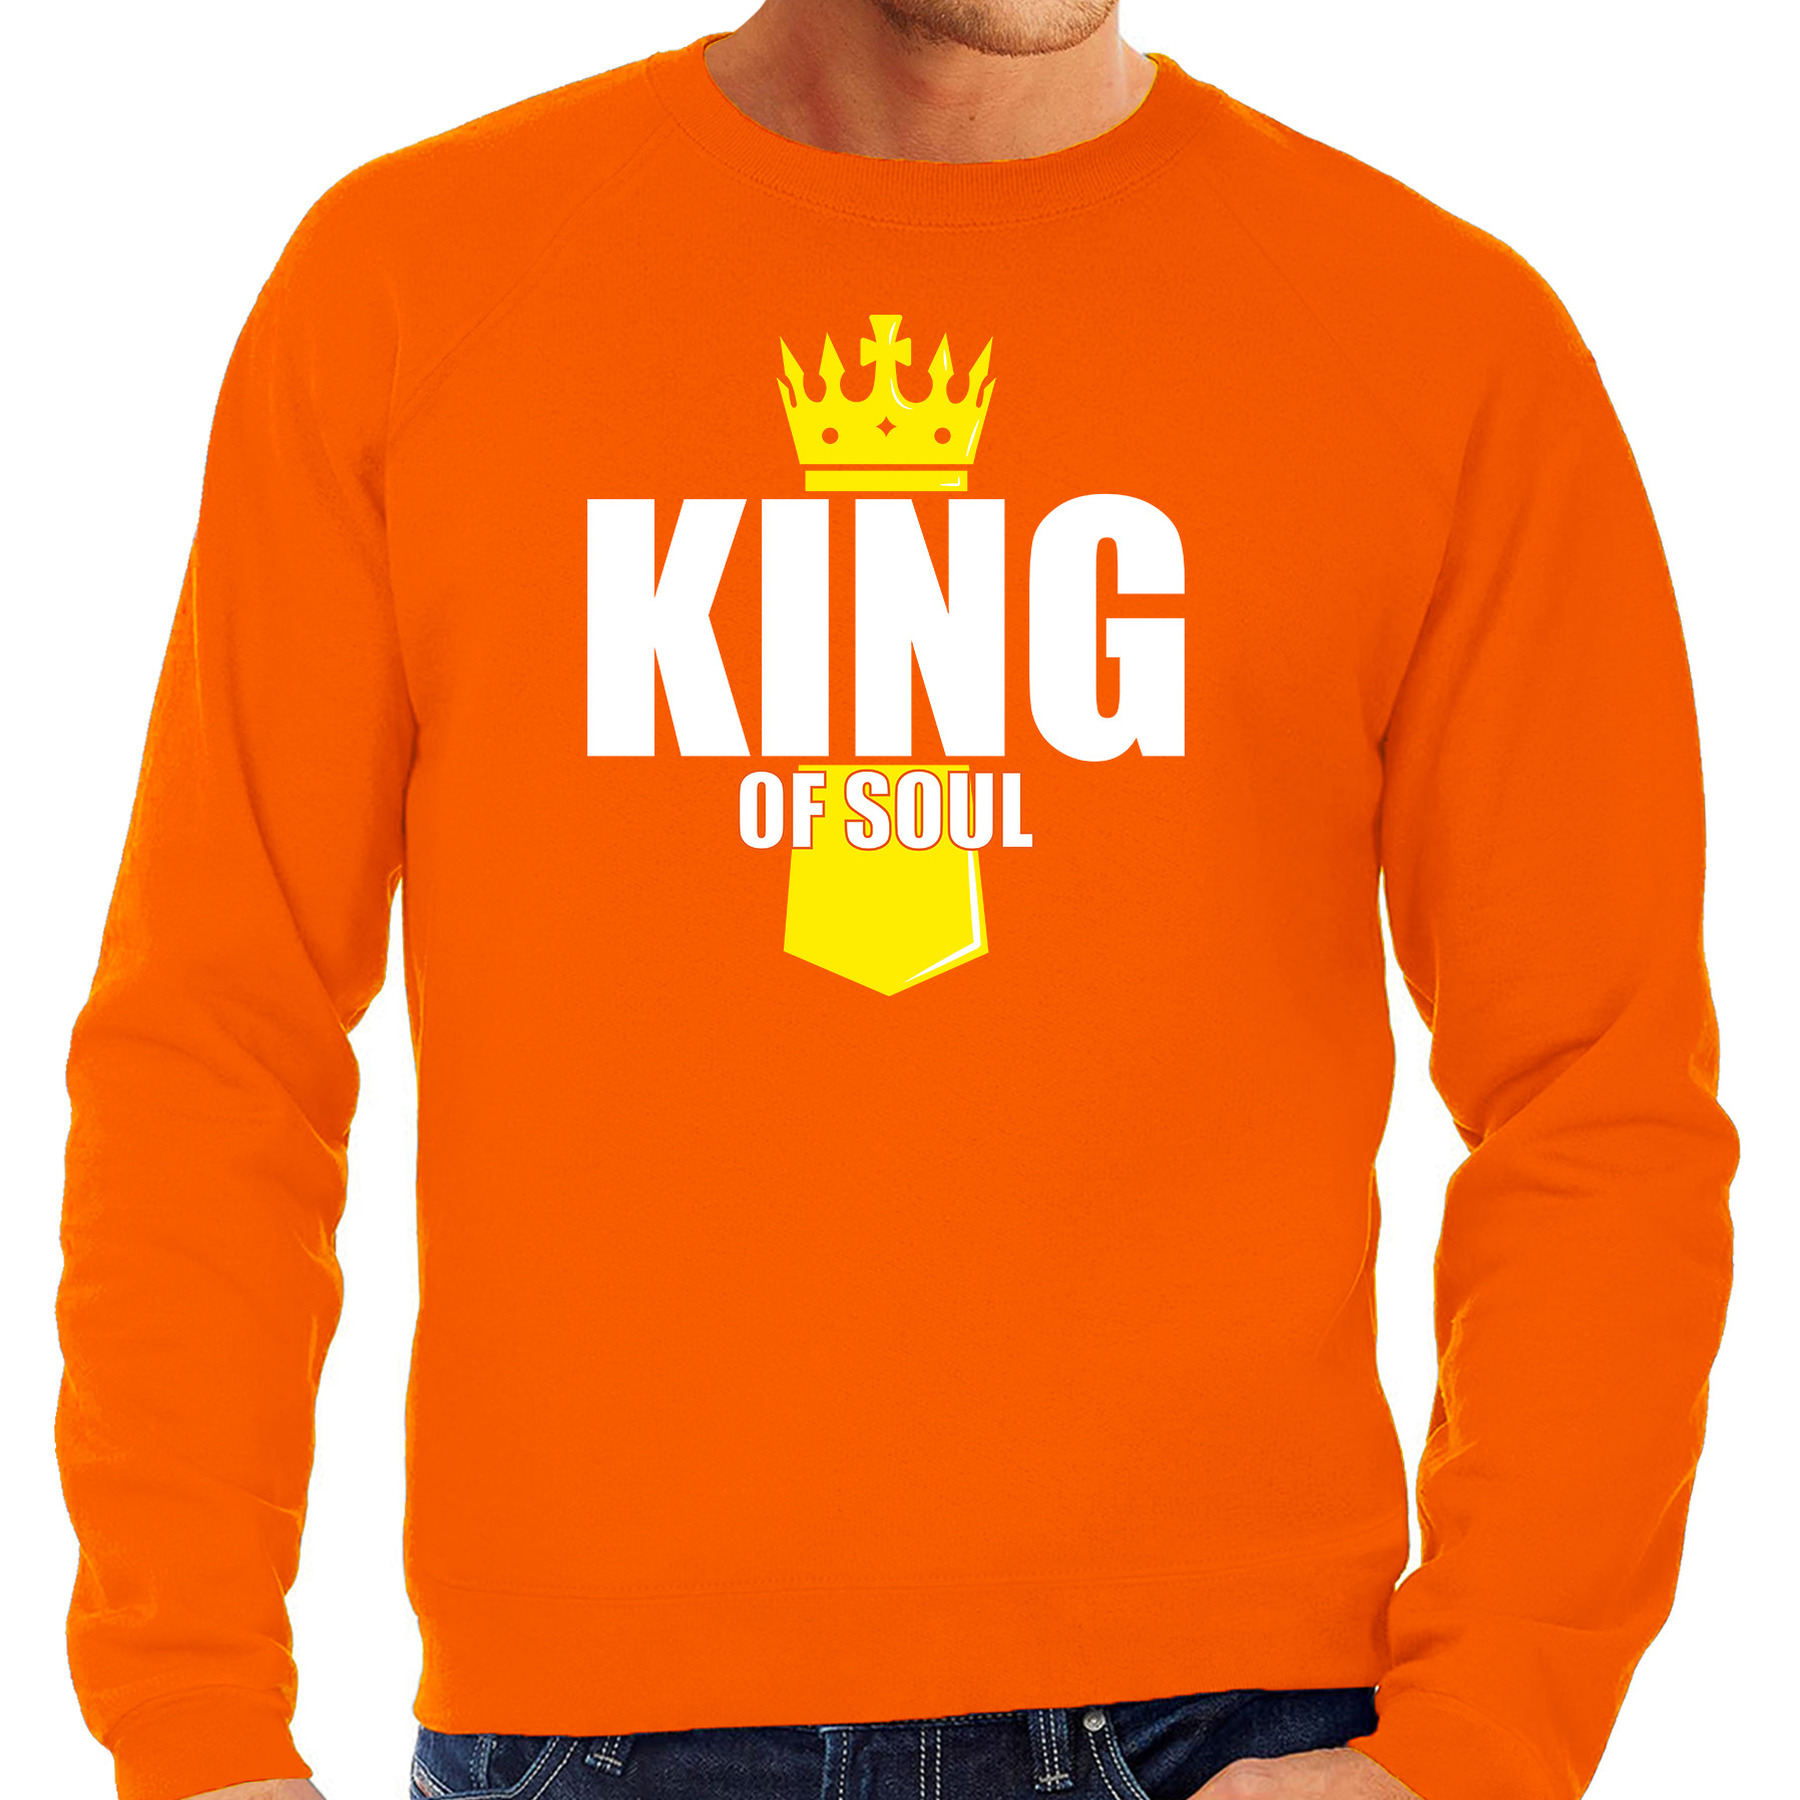 King of soul met kroontje Koningsdag sweater - trui oranje voor heren